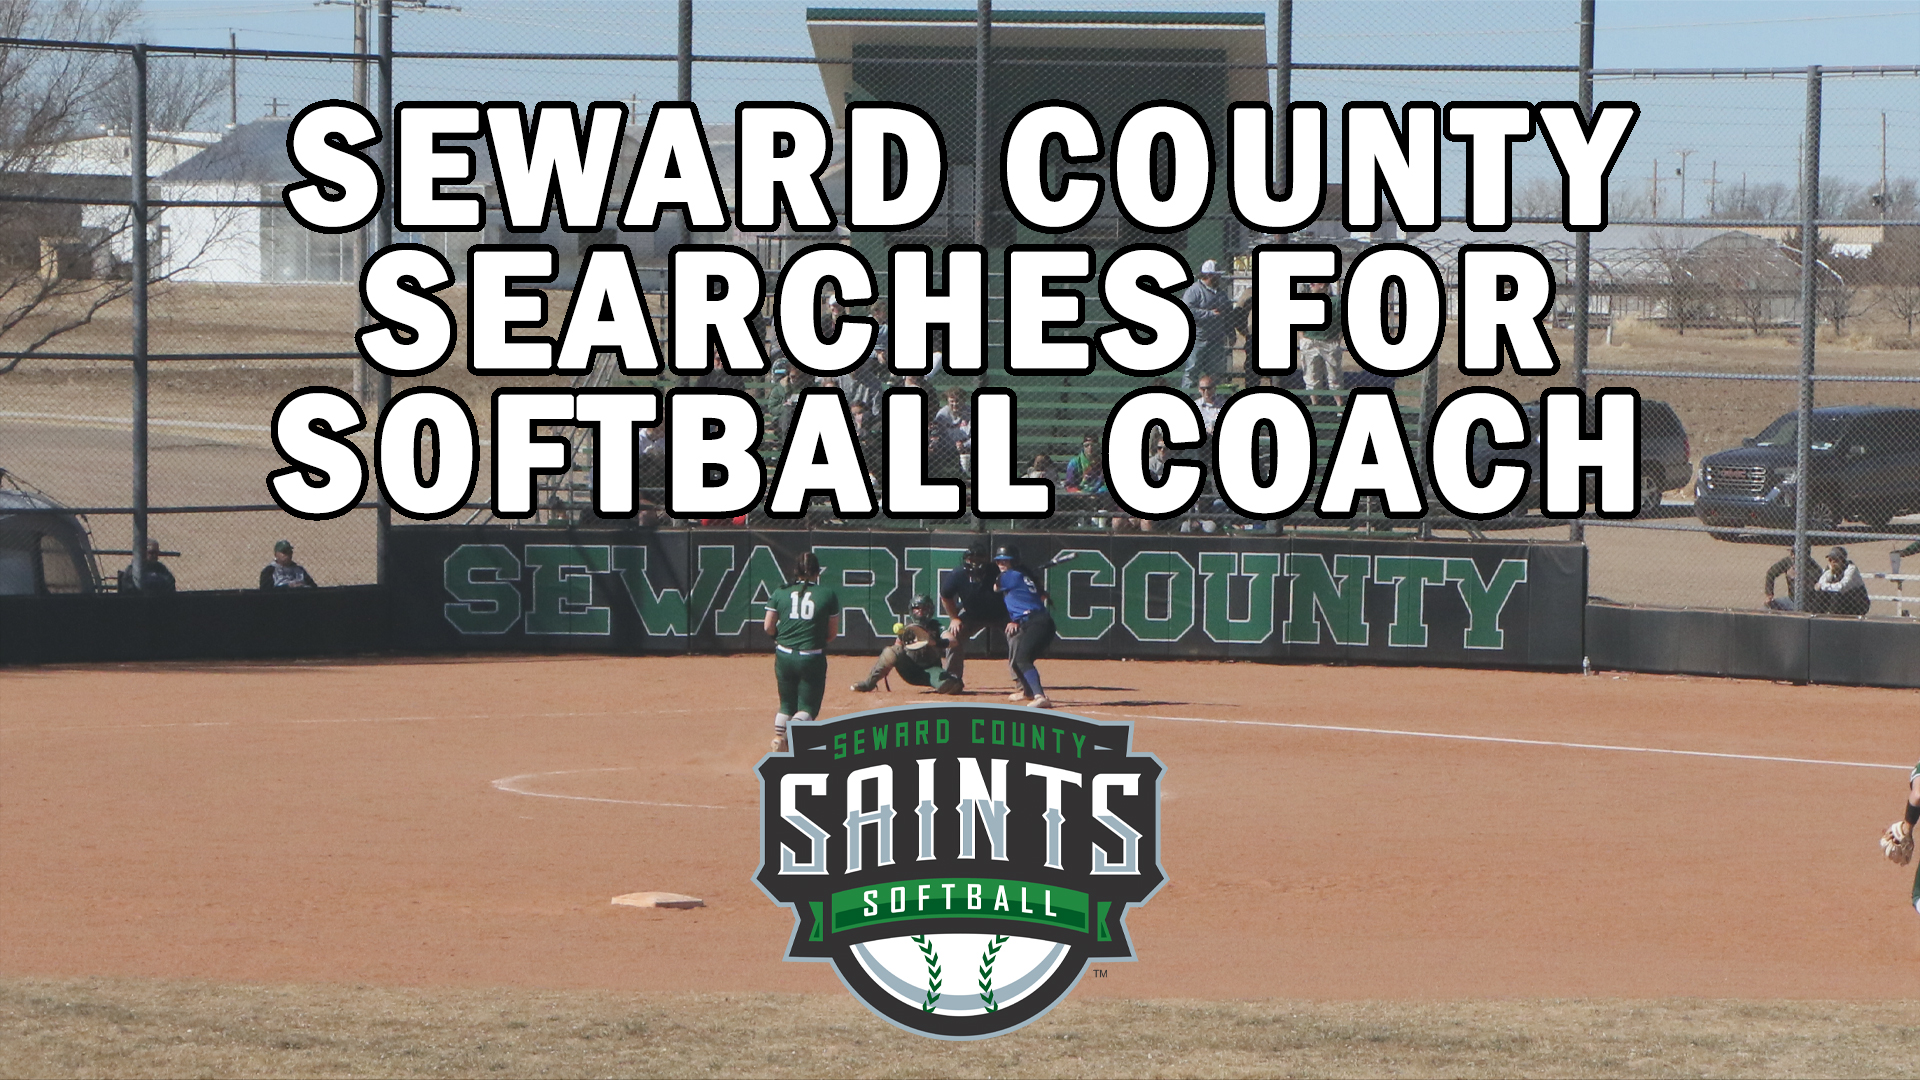 Seward County starts a national search for a Softball Coach